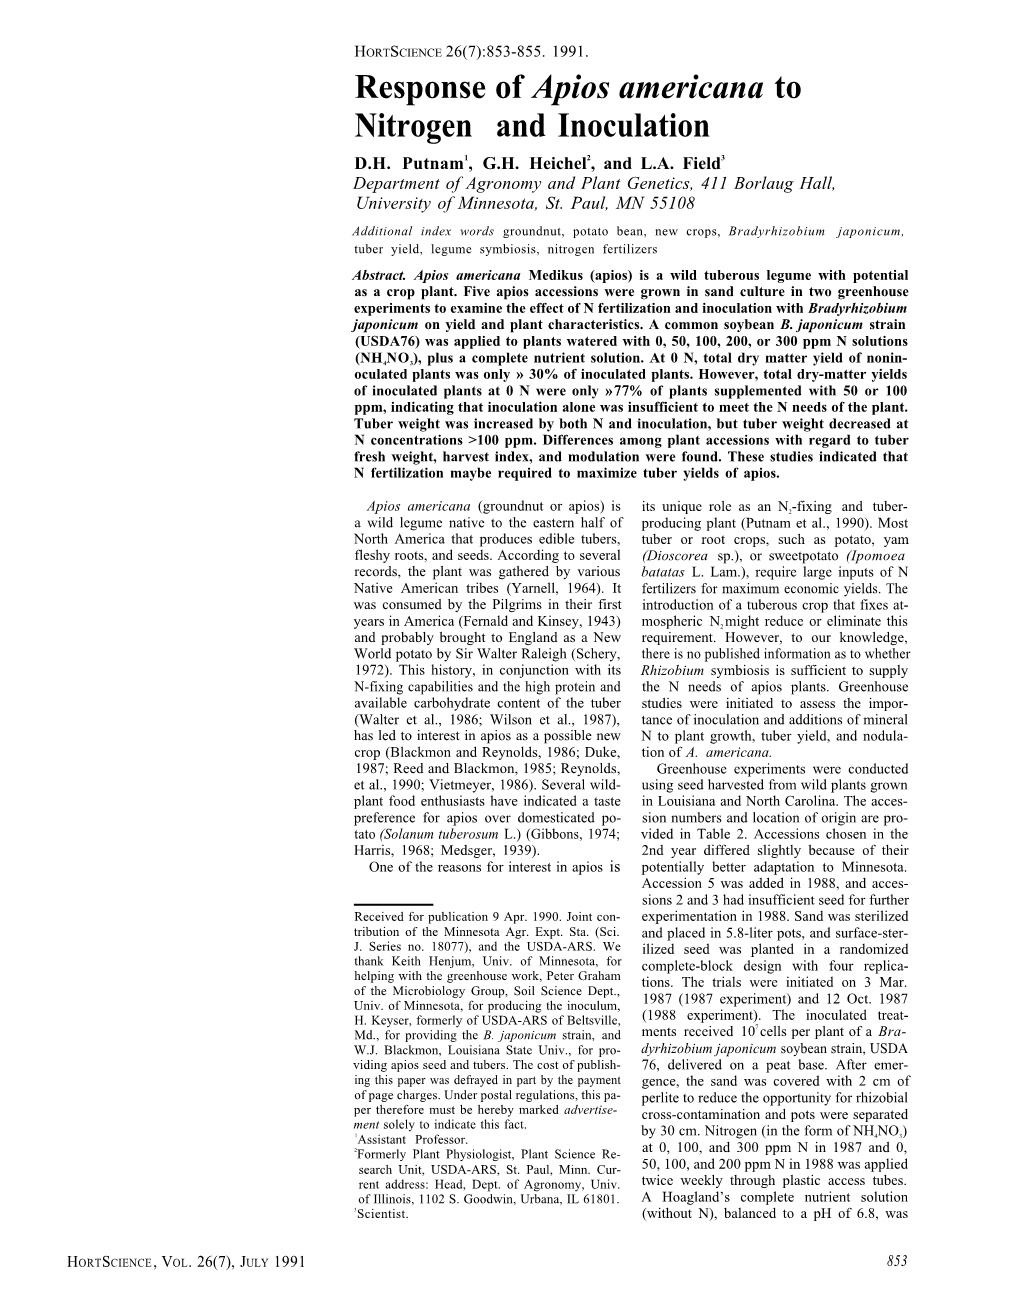 "Response of Apios Americana to Nitrogen and Inoculation"